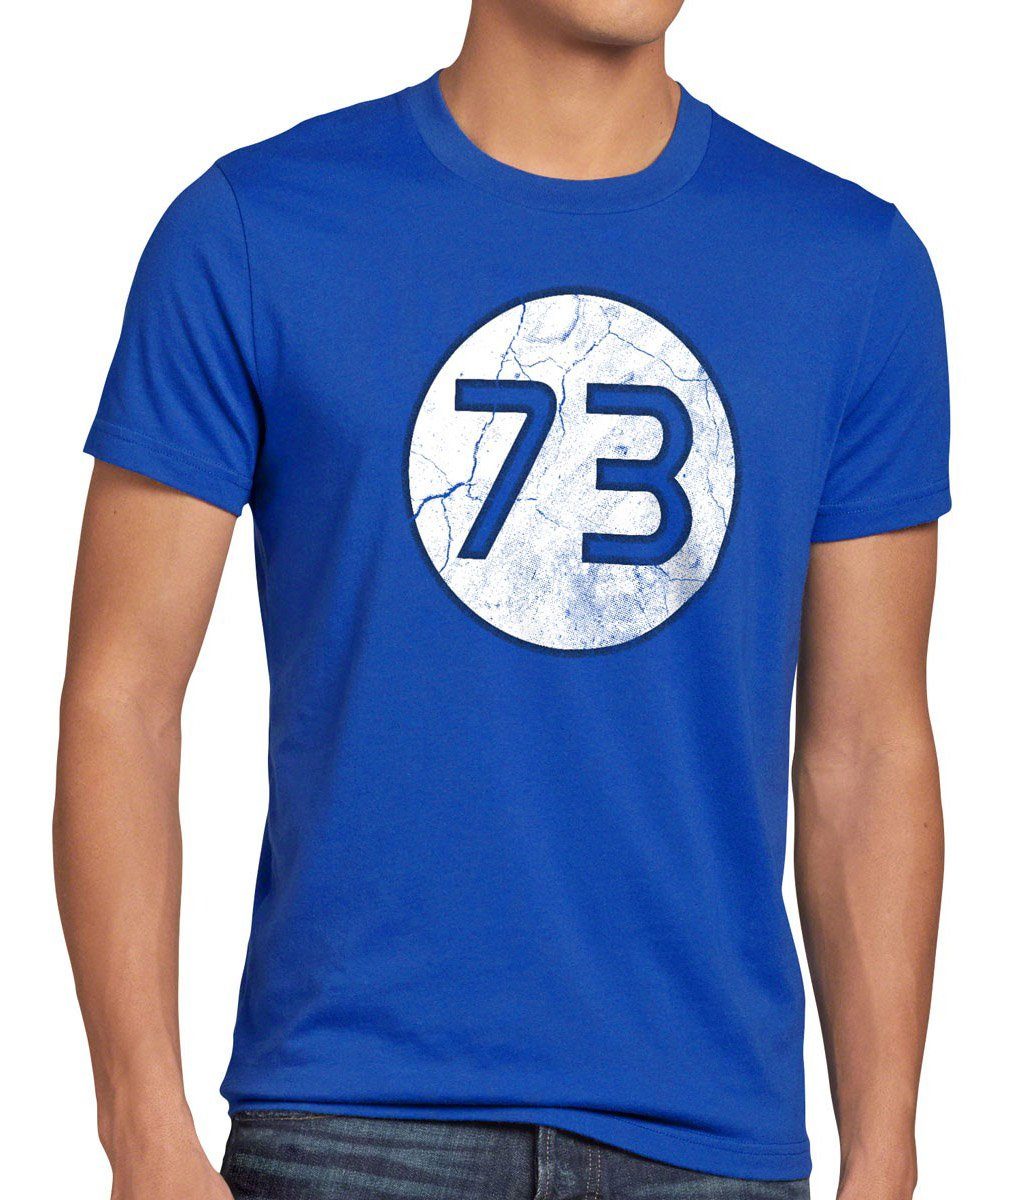 style3 Print-Shirt Herren T-Shirt bang zahl cooper tbbt Sheldon blau theory leonard big 73 Lieblingszahl